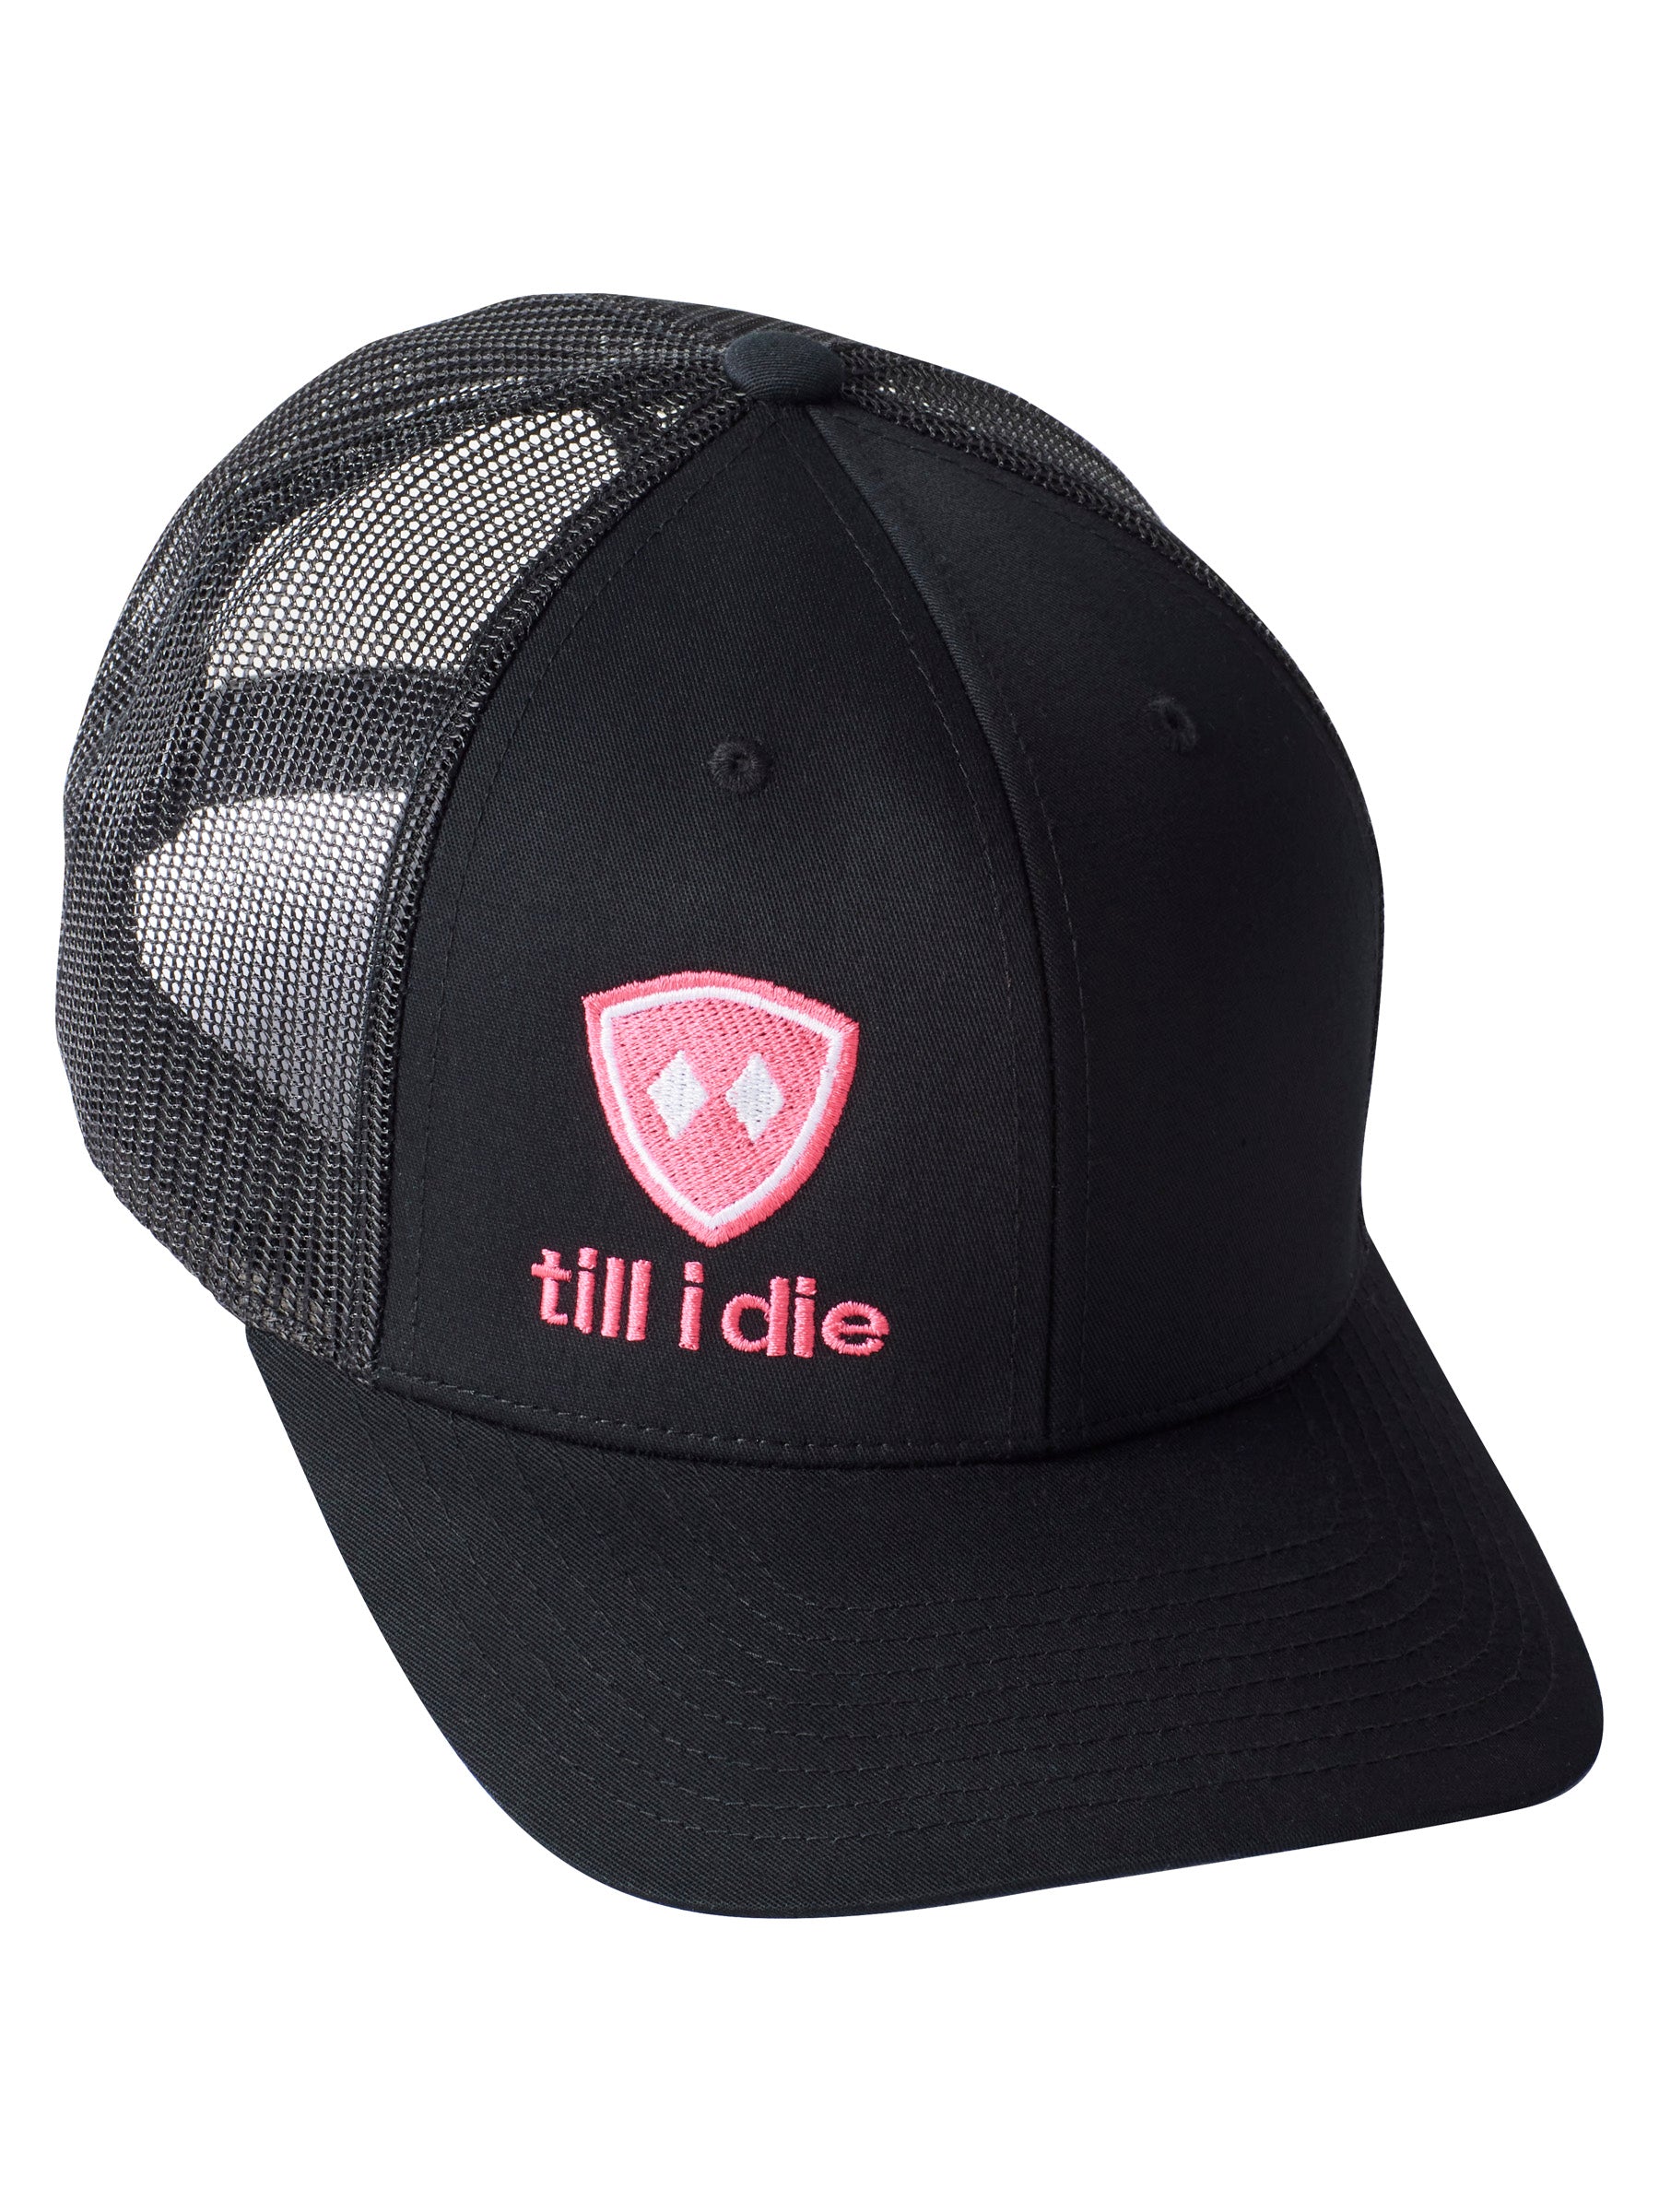 Till I Die Logo // Classic Trucker Hat // Black + Neon Pink & White